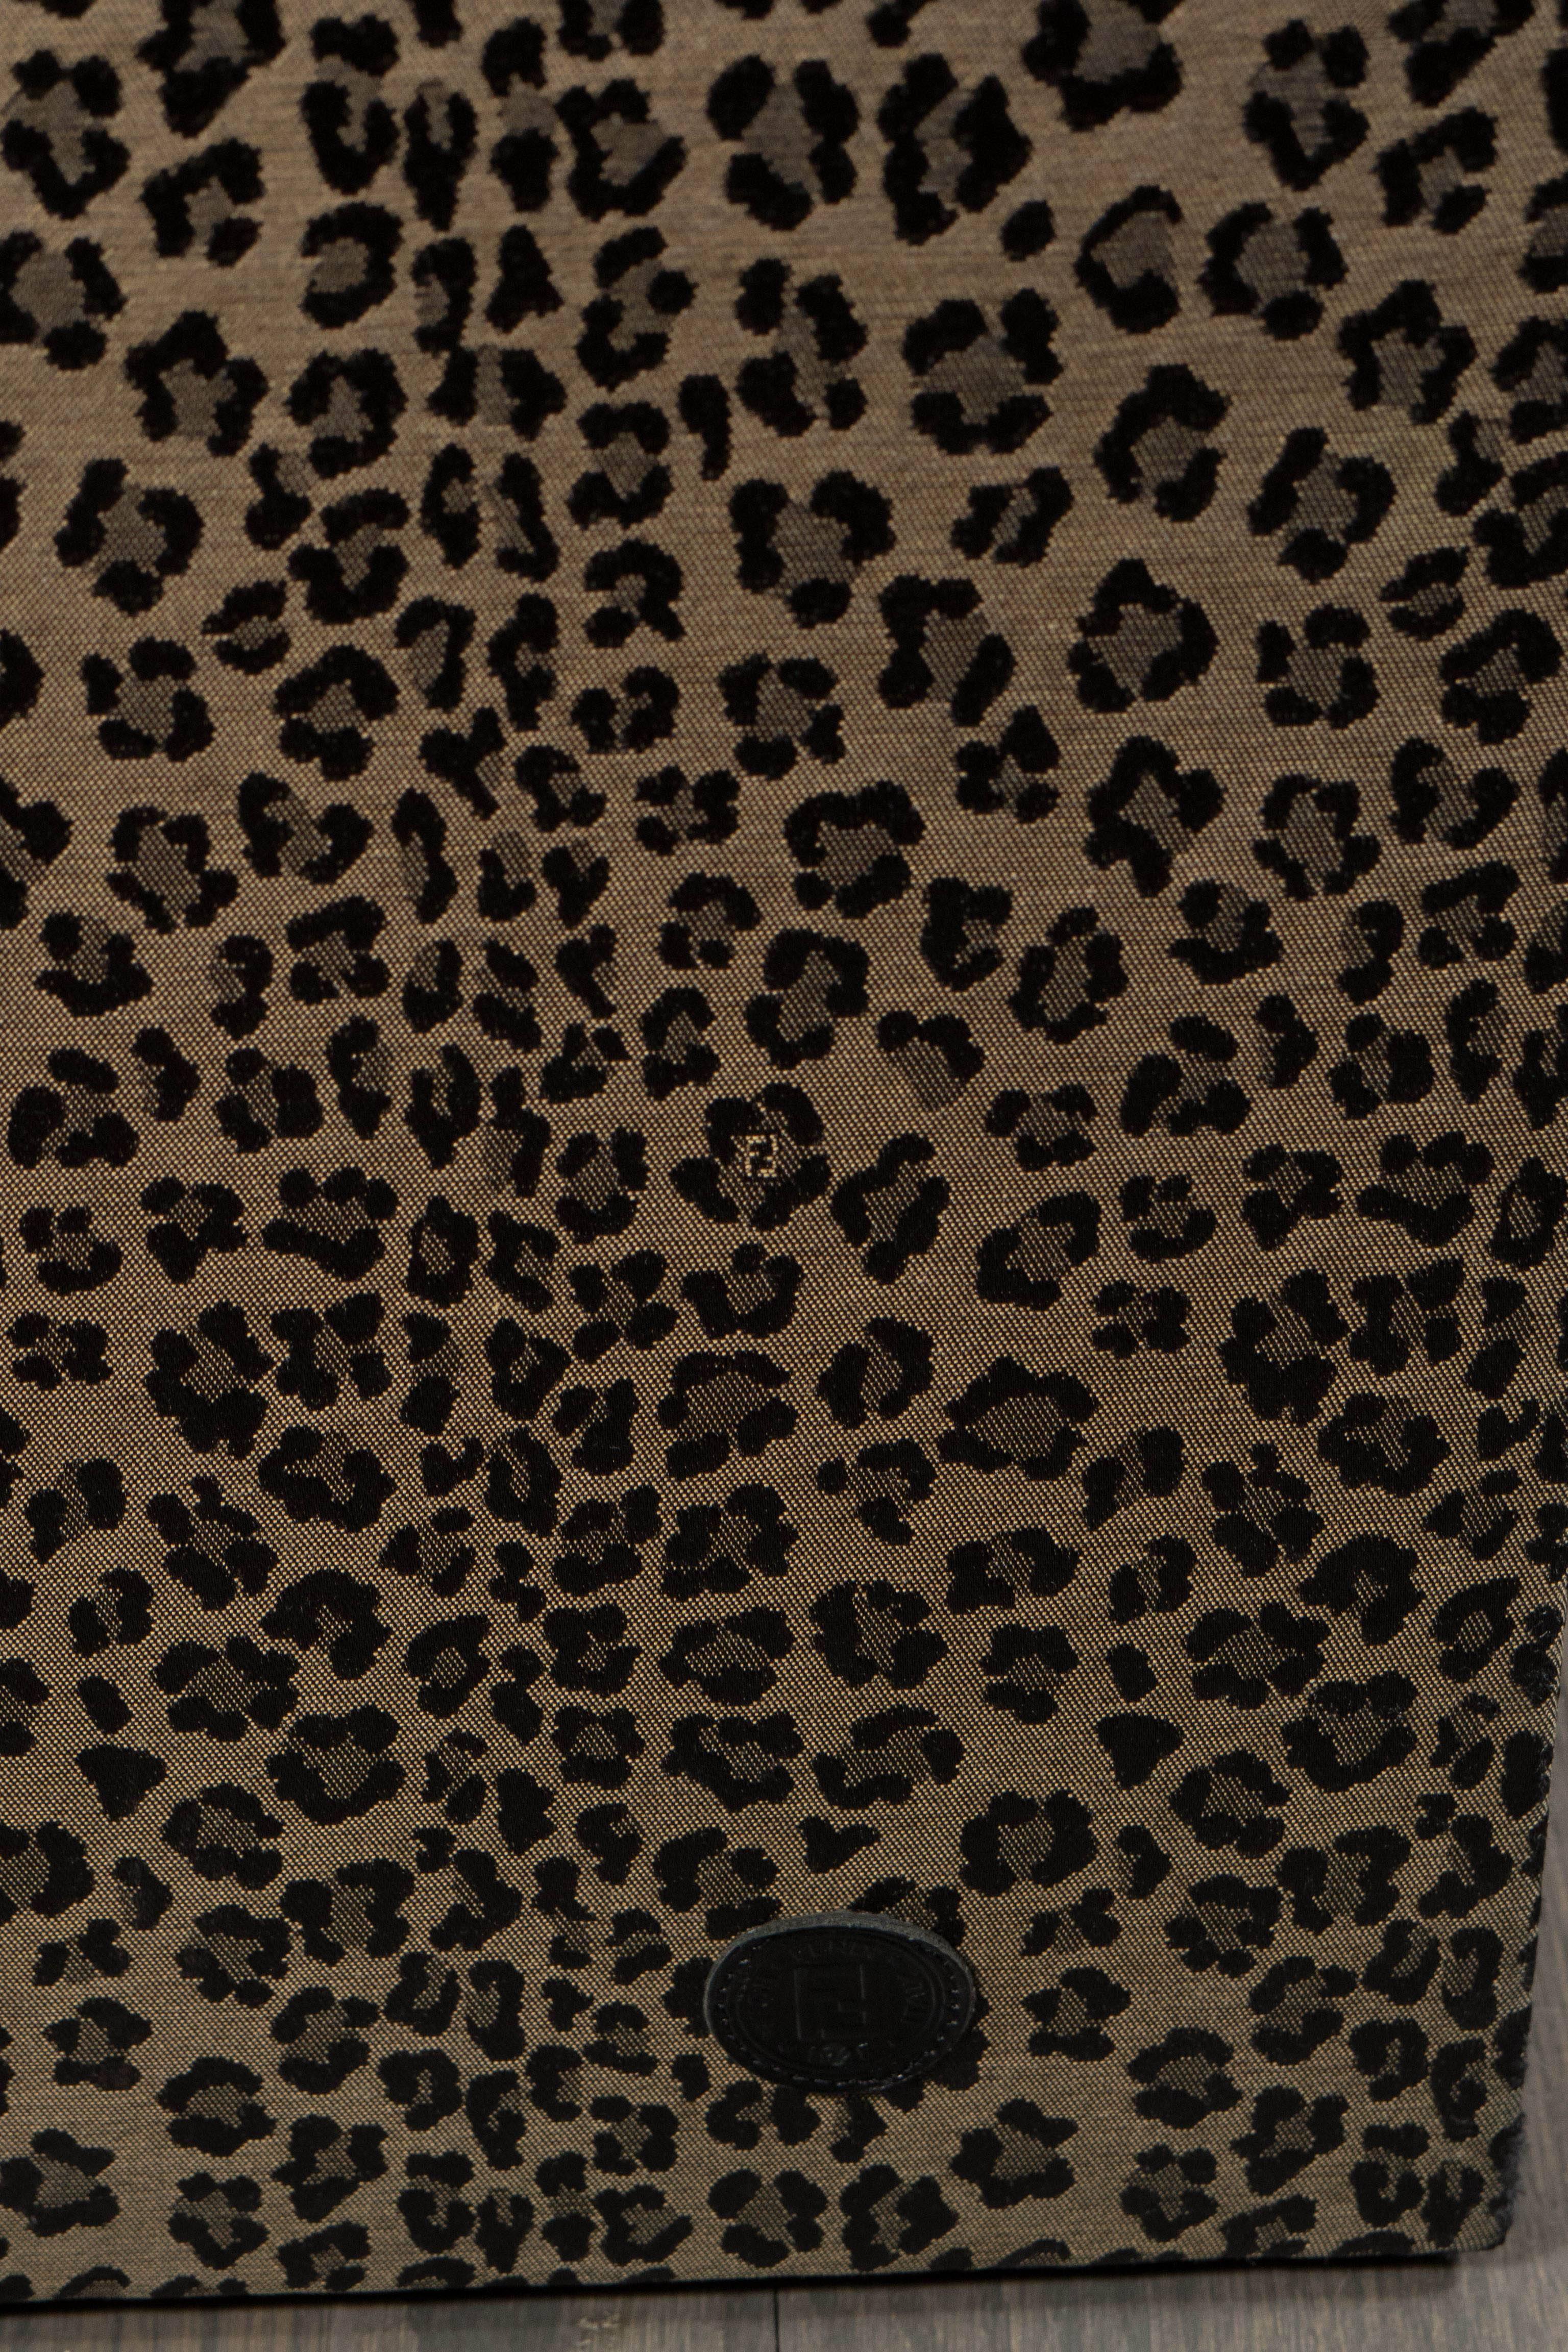 Italian Fendi Casa Bench with Original Fendi Leopard Silk Blend Upholstery